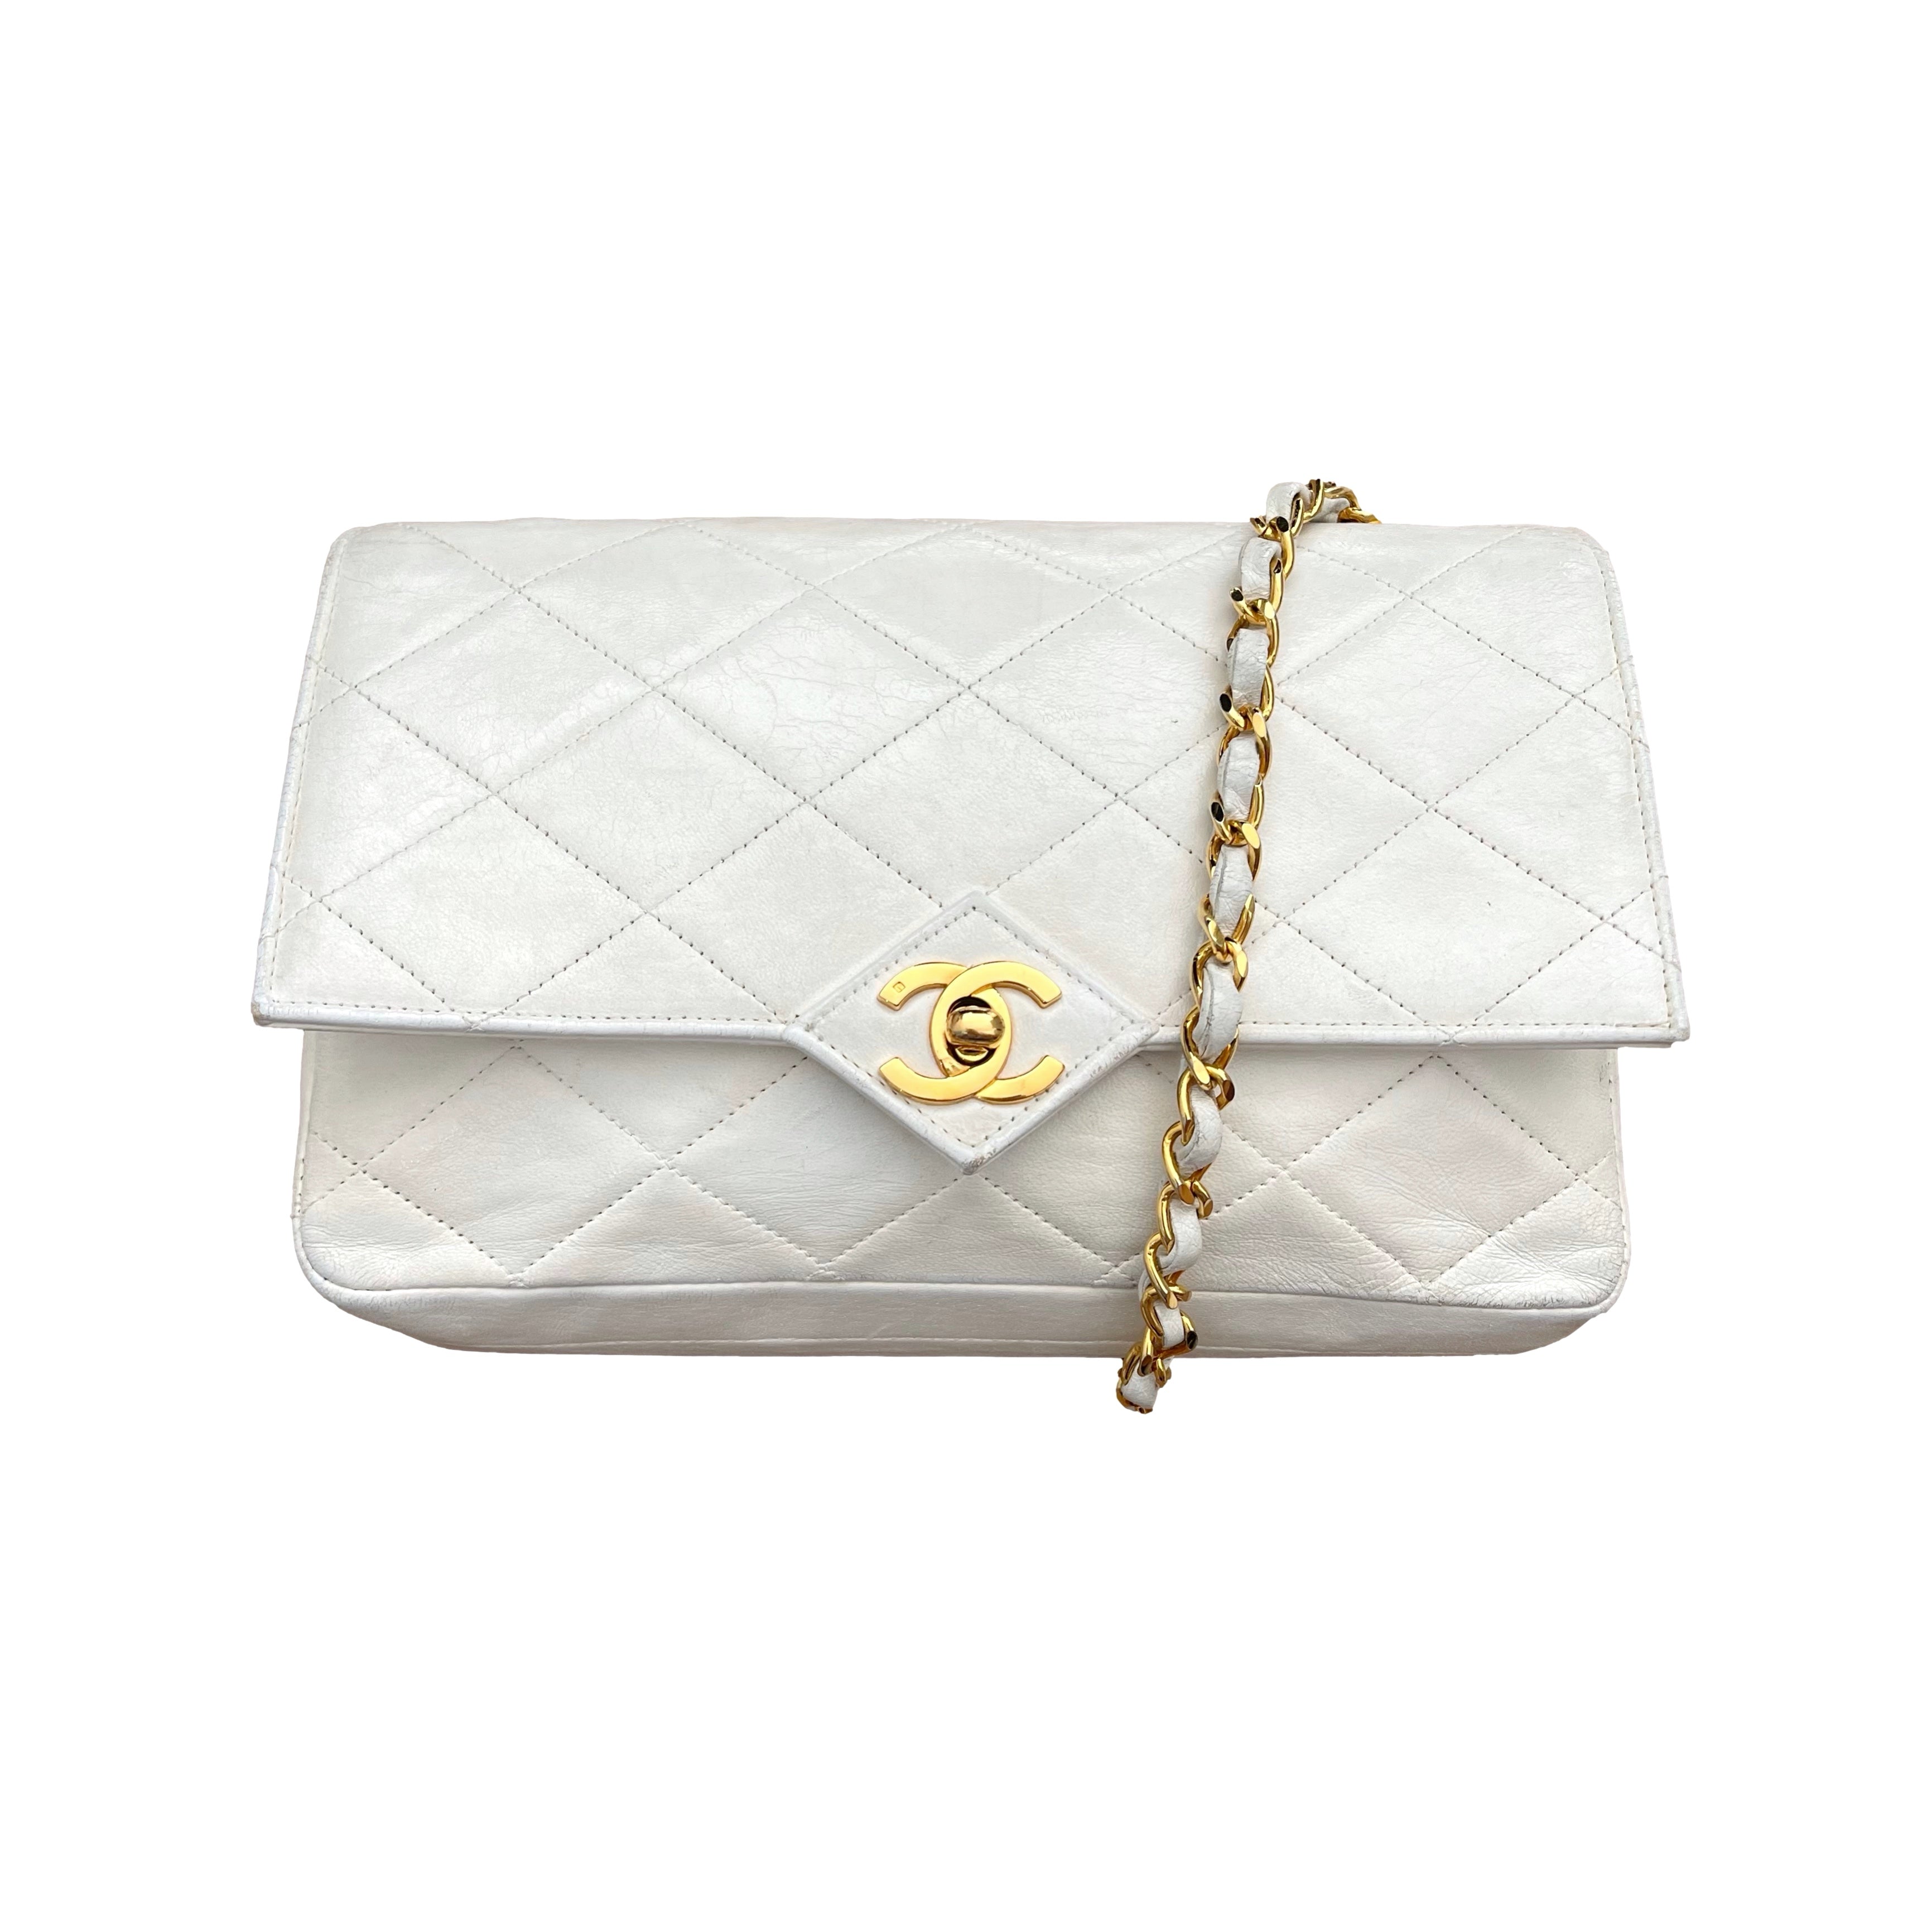 Chanel White Handbags